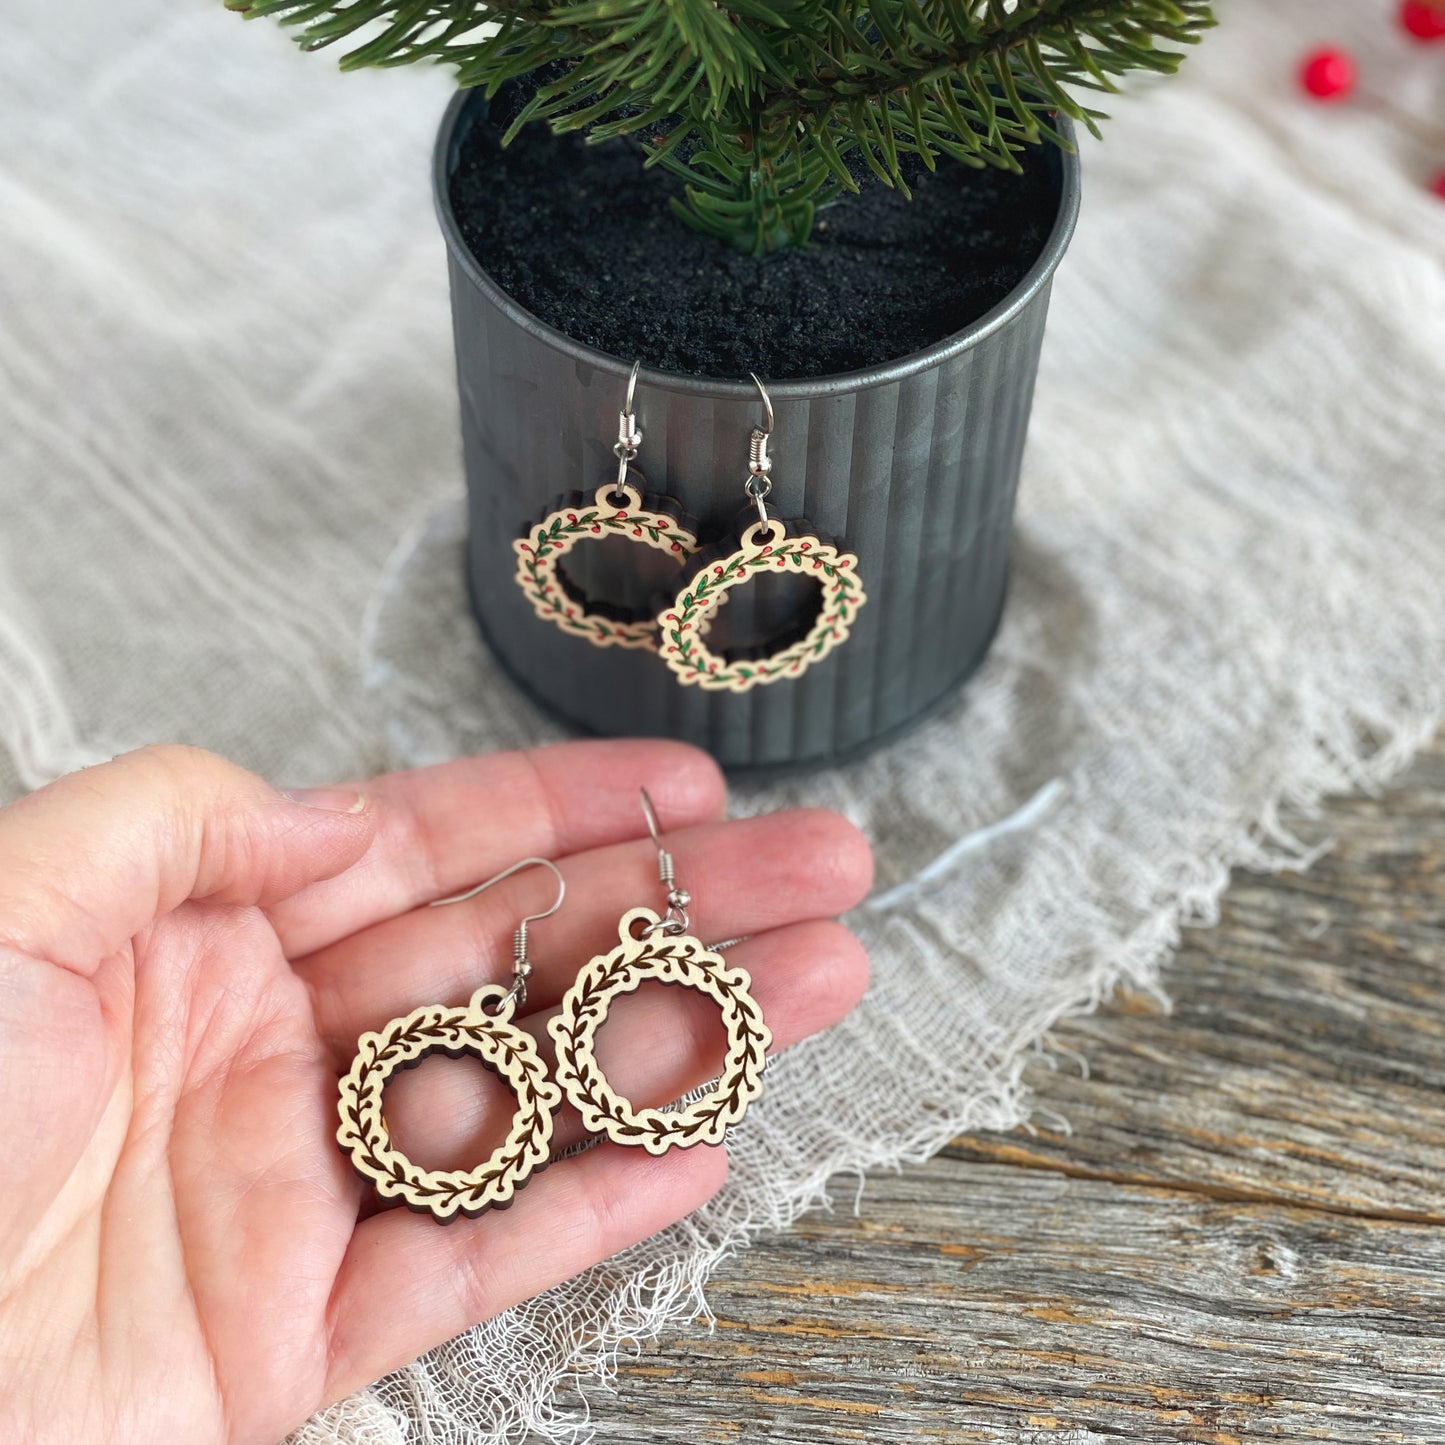 Laser engraved Christmas wreath earrings, holiday earrings